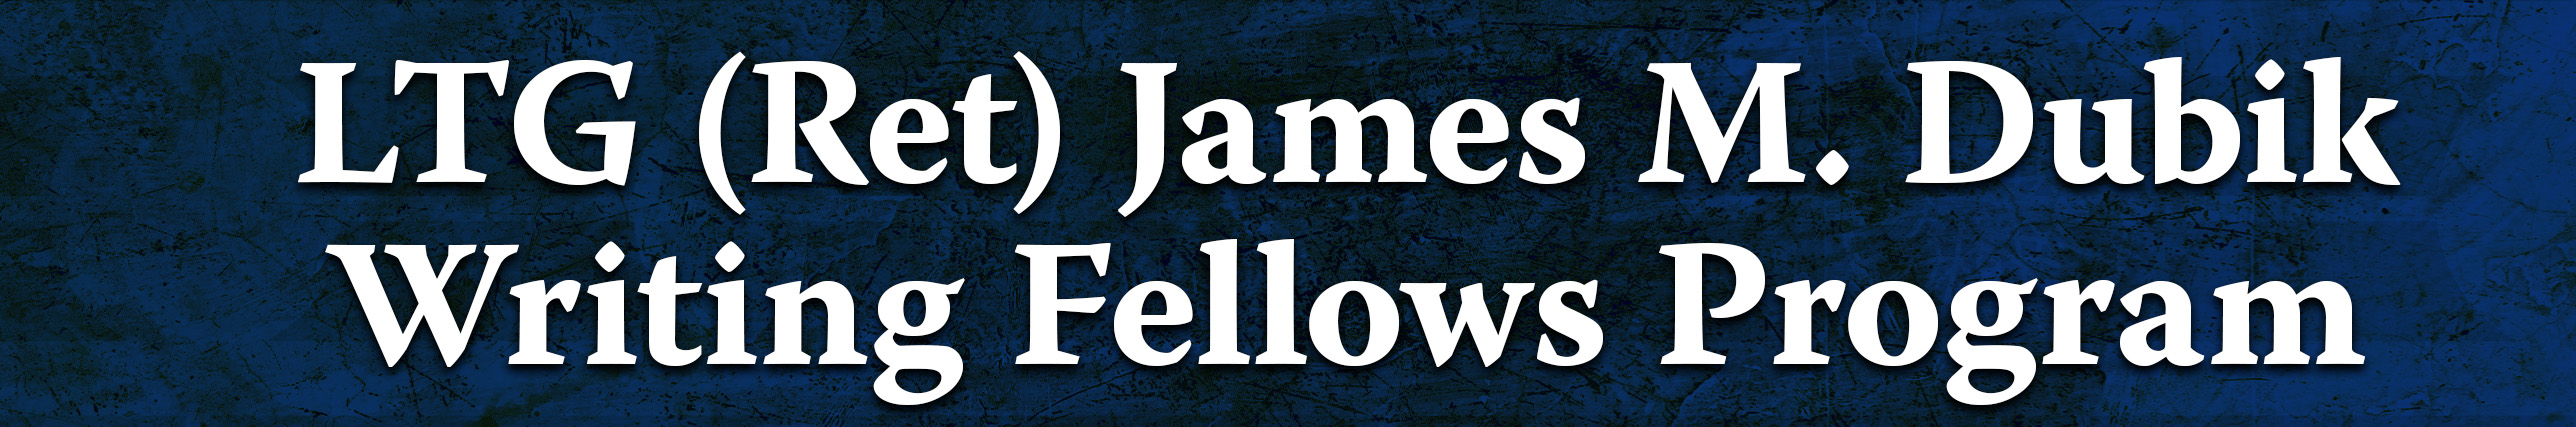 LTG (Ret) James Dubic Writing Fellowship Program